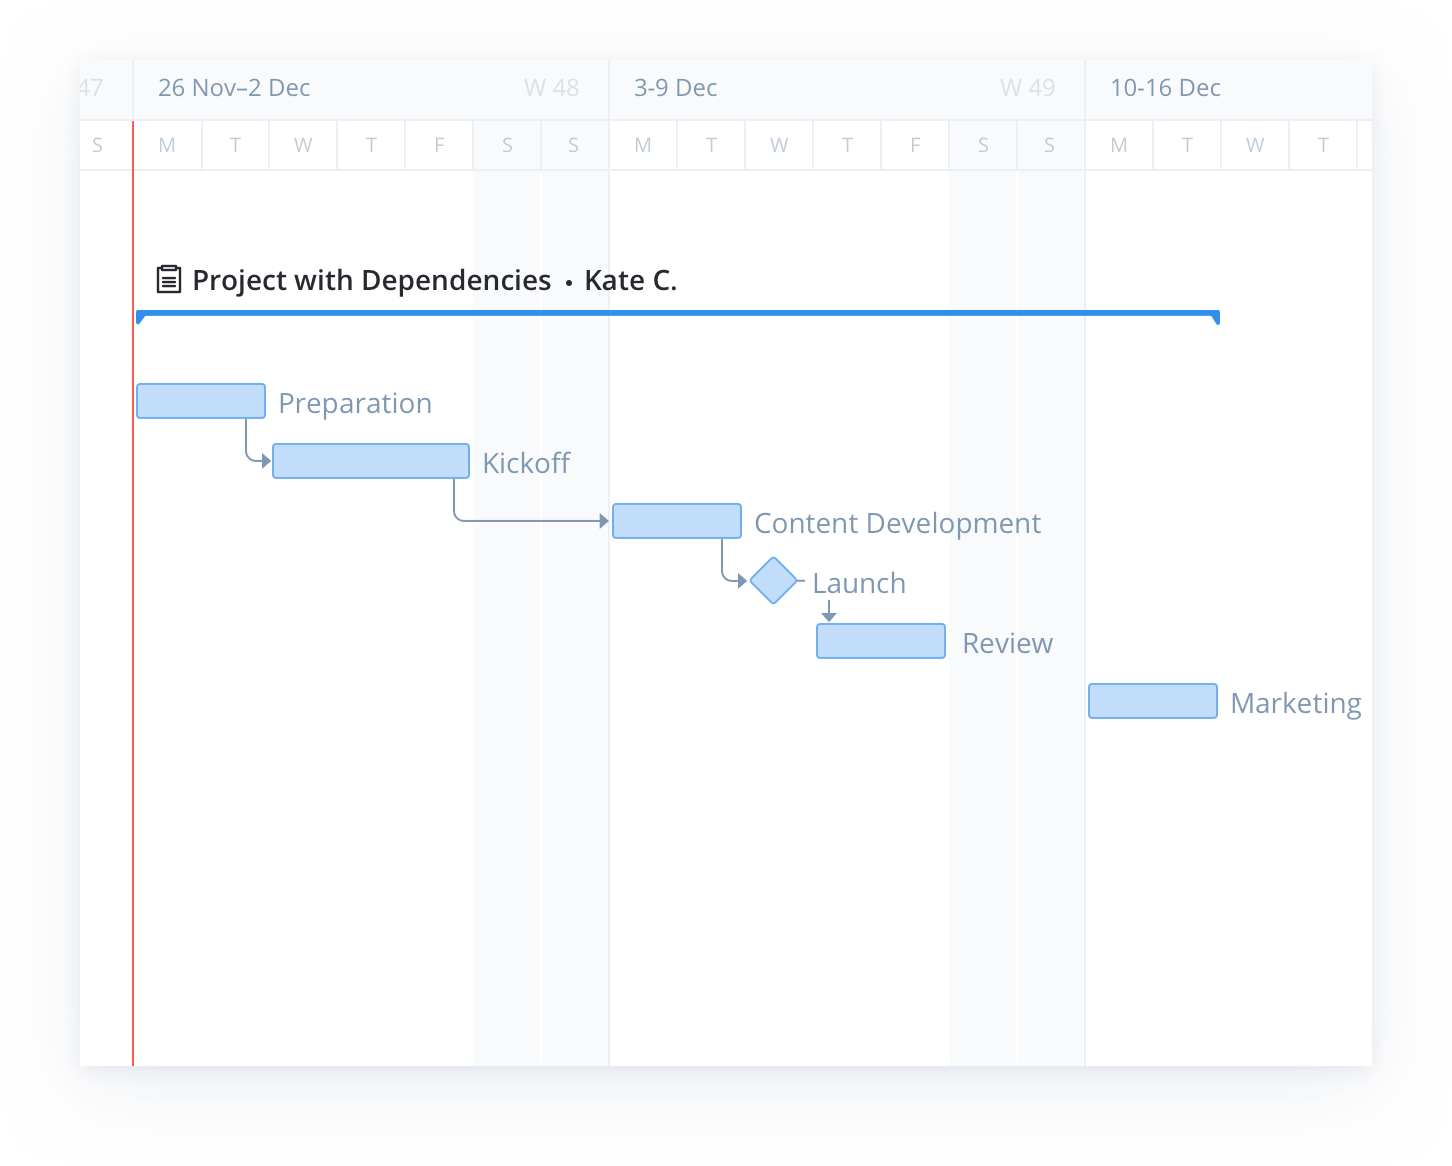 gantt chart project management template excel